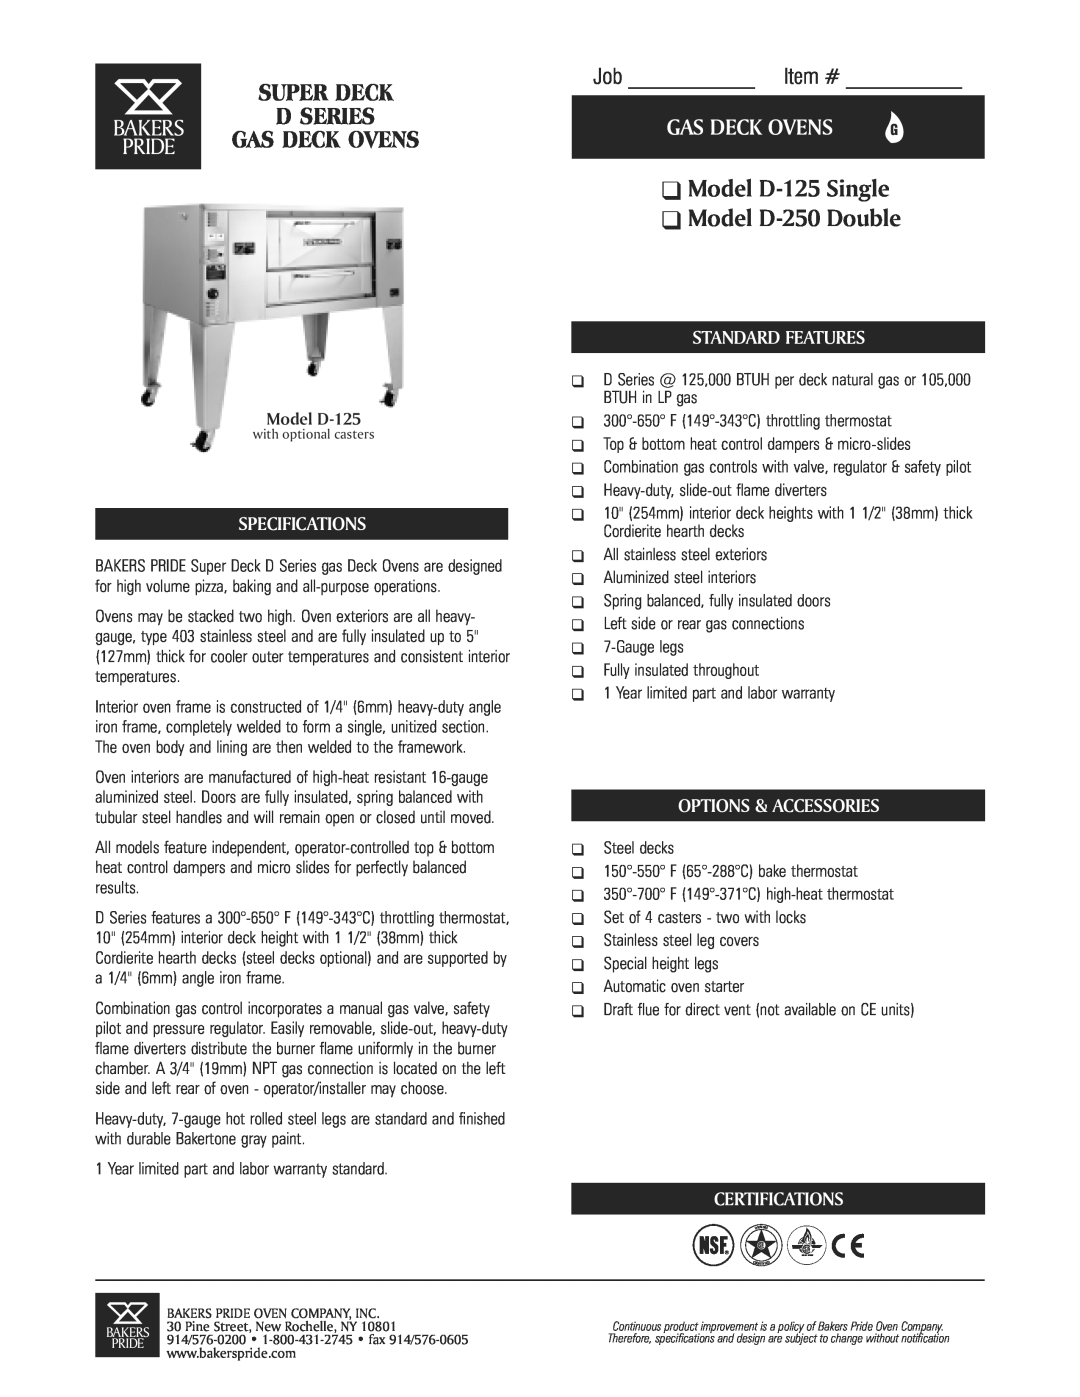 Bakers Pride Oven specifications Model D-125Single Model D-250Double, Gas Deck Ovens, D Series, Job Item #, Super Deck 